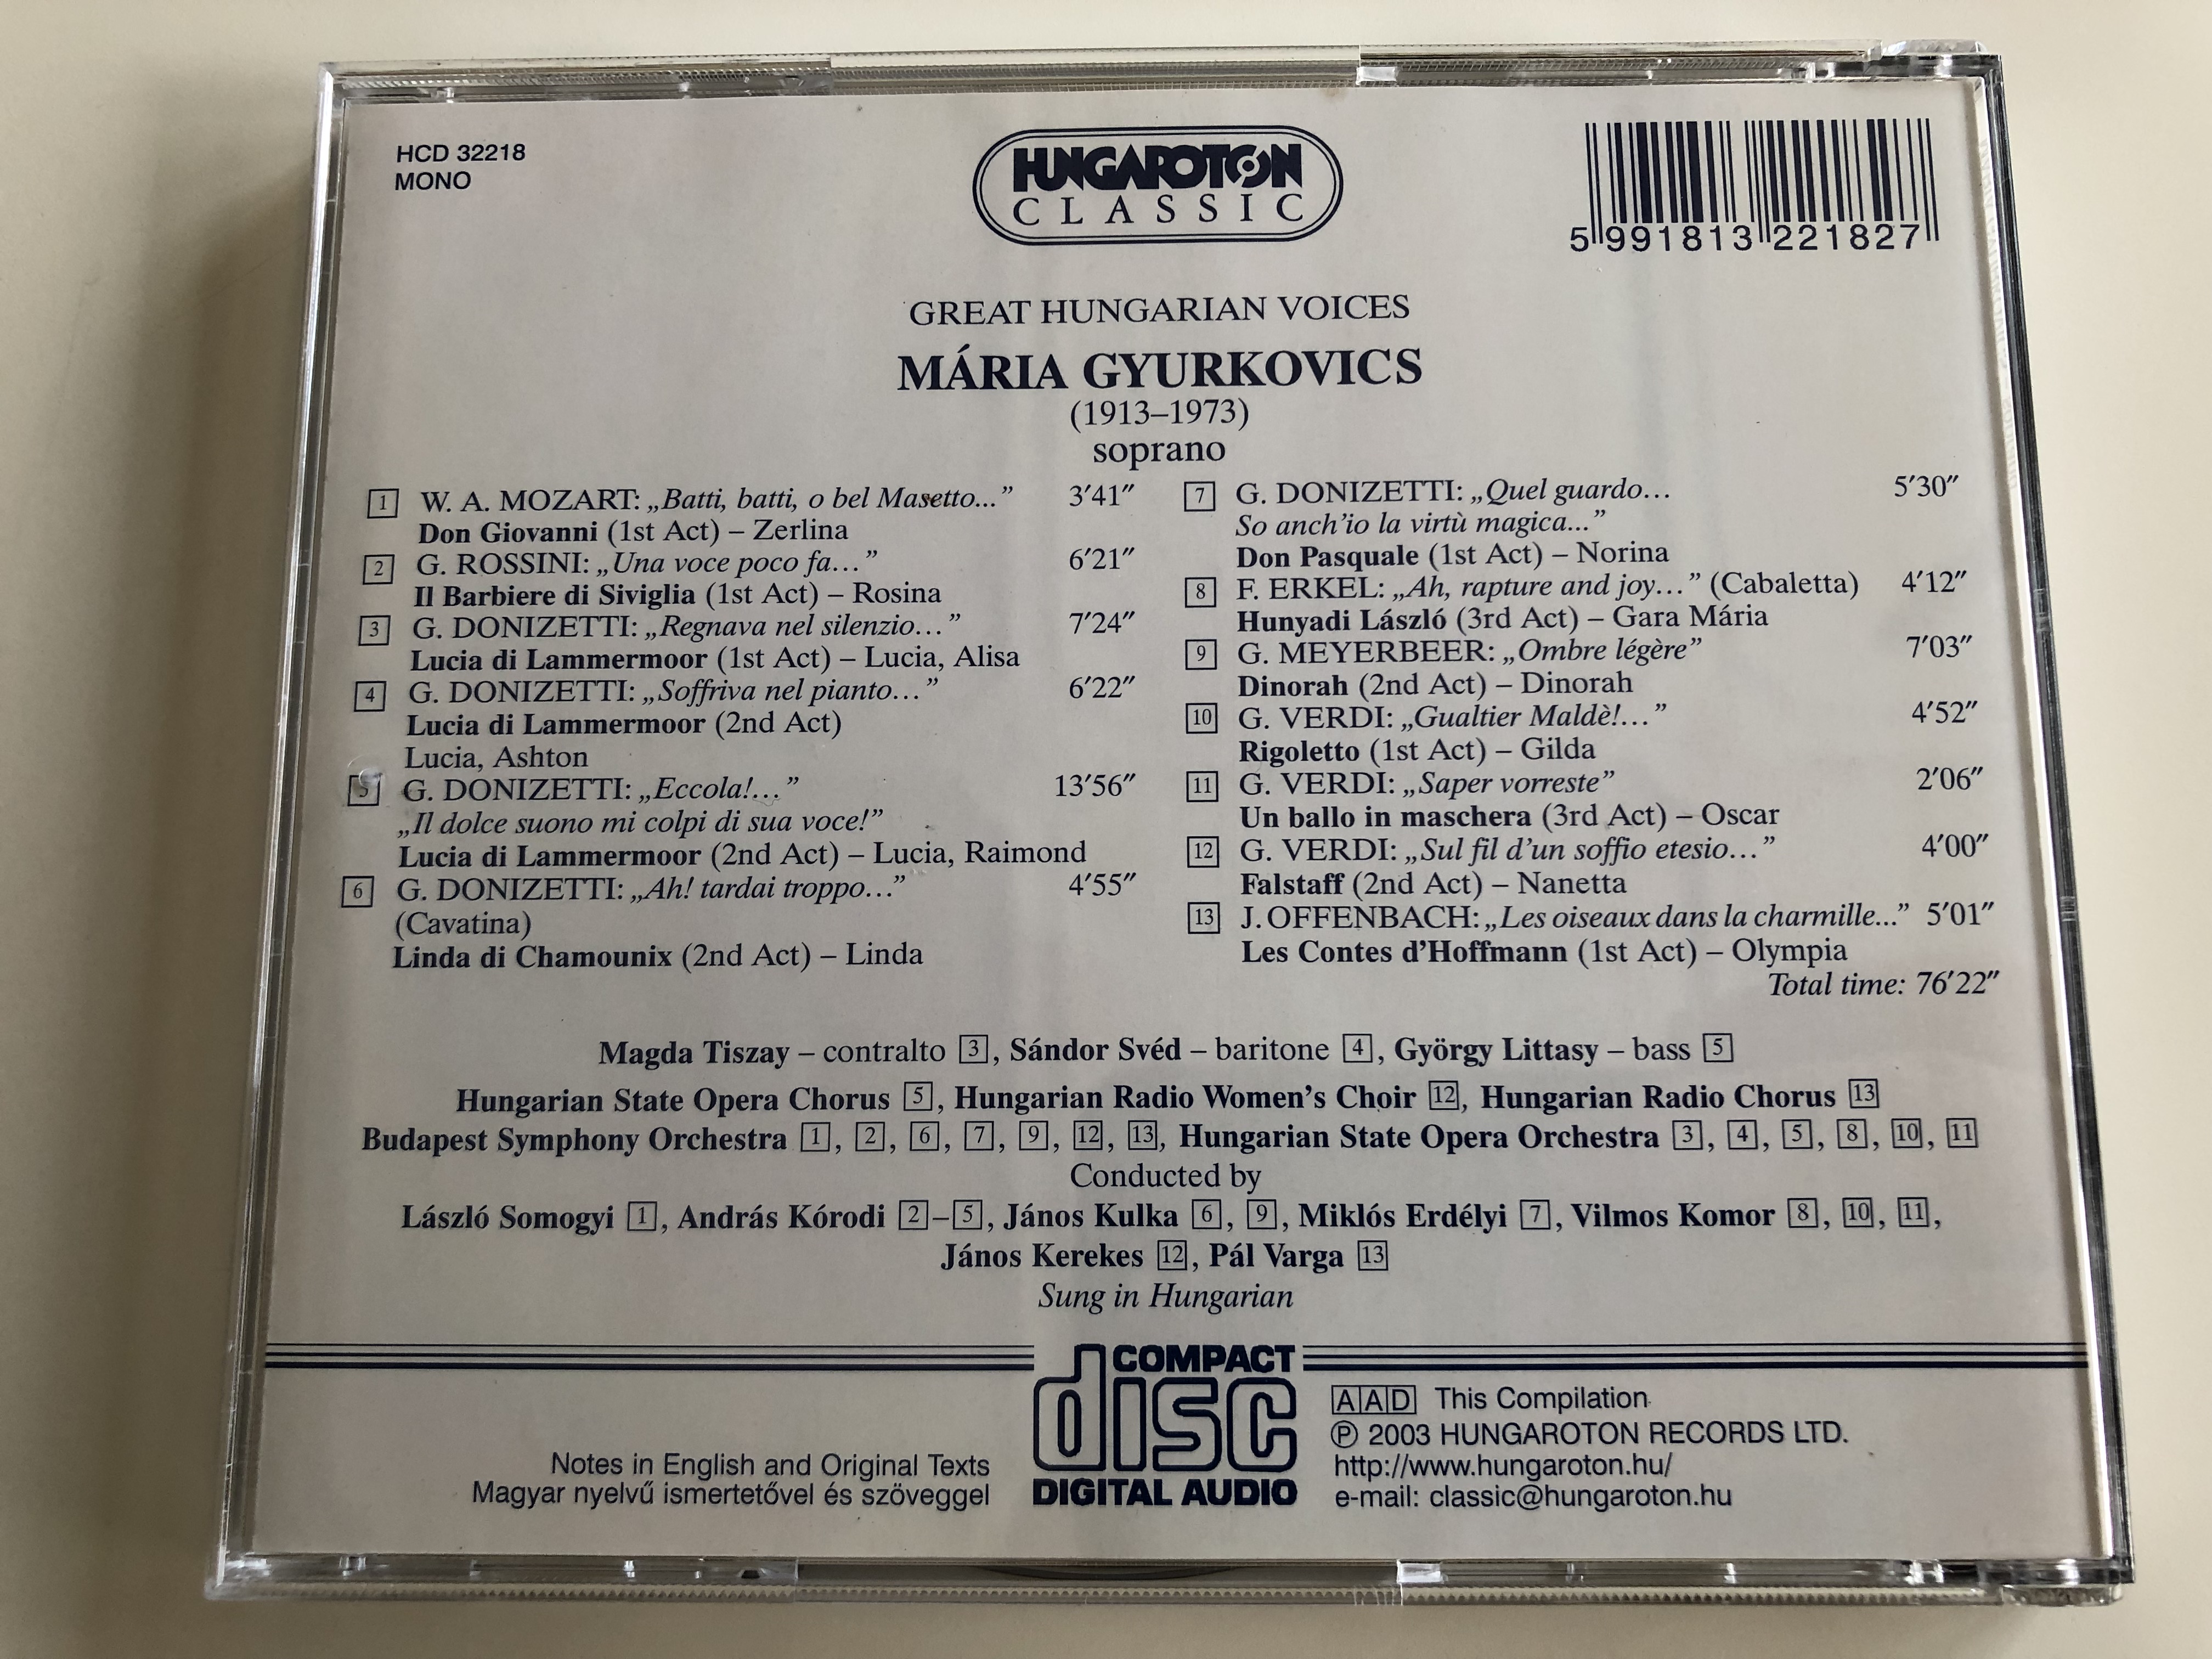 m-ria-gyurkovics-soprano-great-hungarian-voices-audio-cd-2003-mozart-rossini-donizetti-erkel-meyerbeer-verdi-offenbach-hungaroton-classic-hcd-32218-10-.jpg